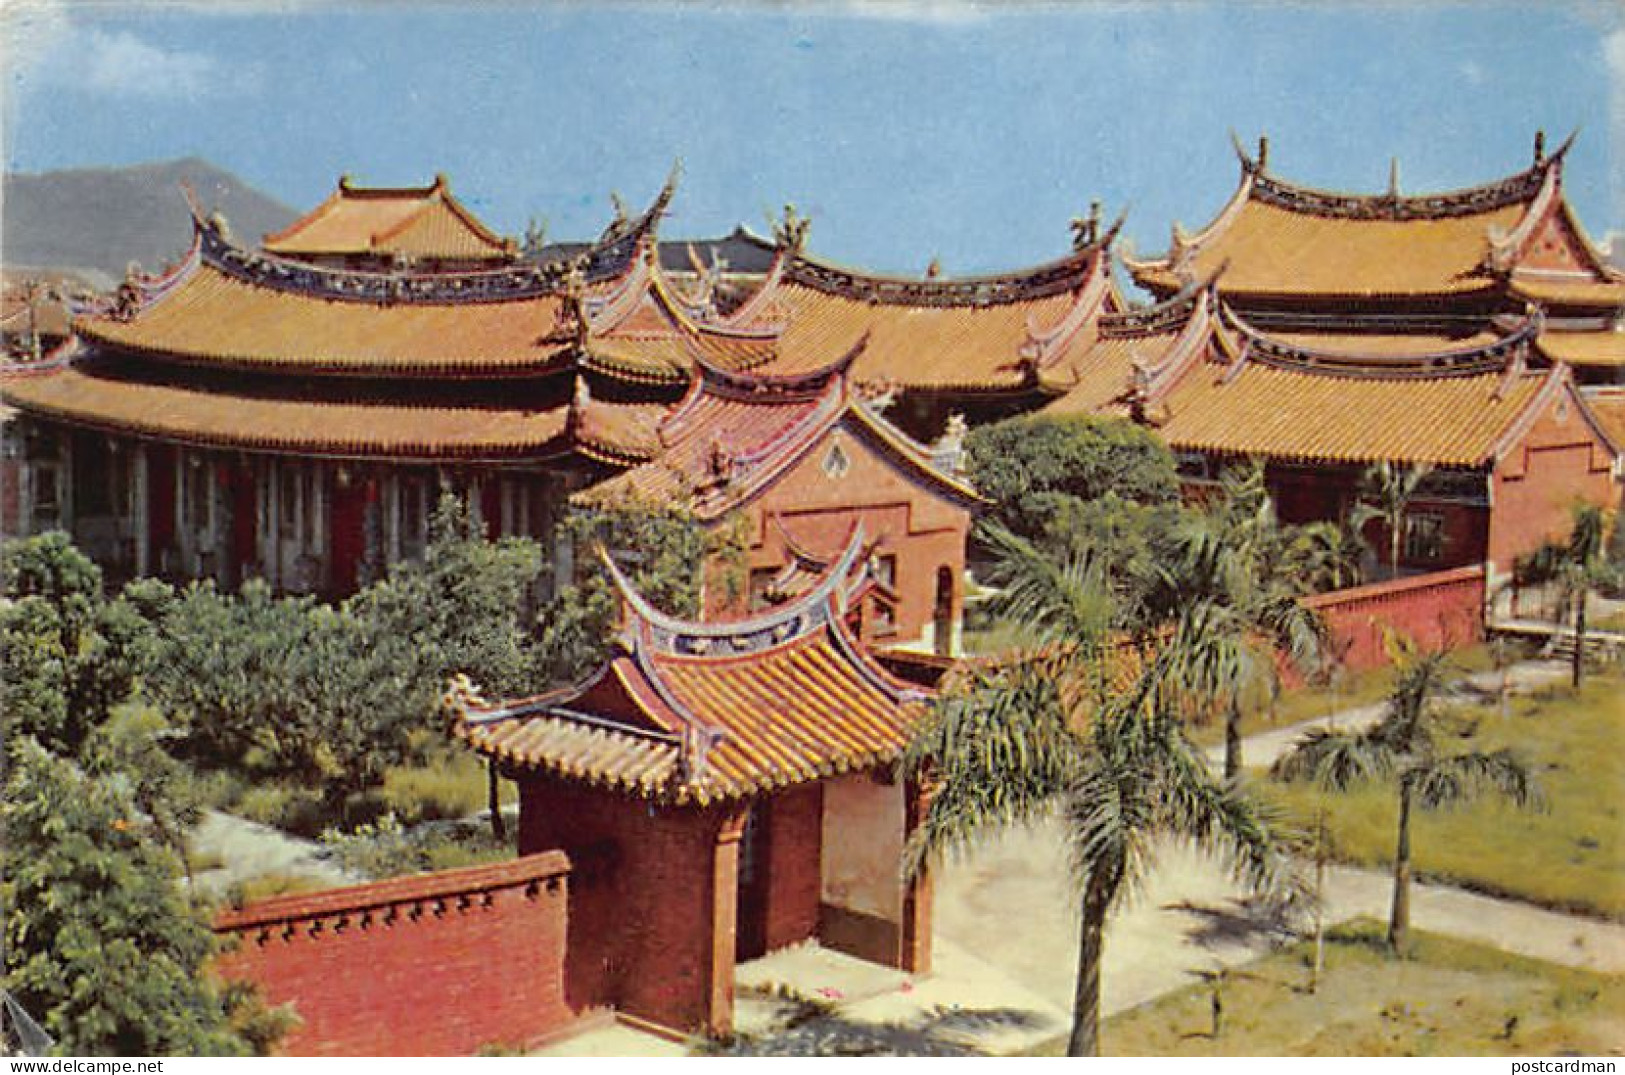 Taiwan - Taipei Confucius Temple - Publ. Ming Ho Art Press  - Taiwan